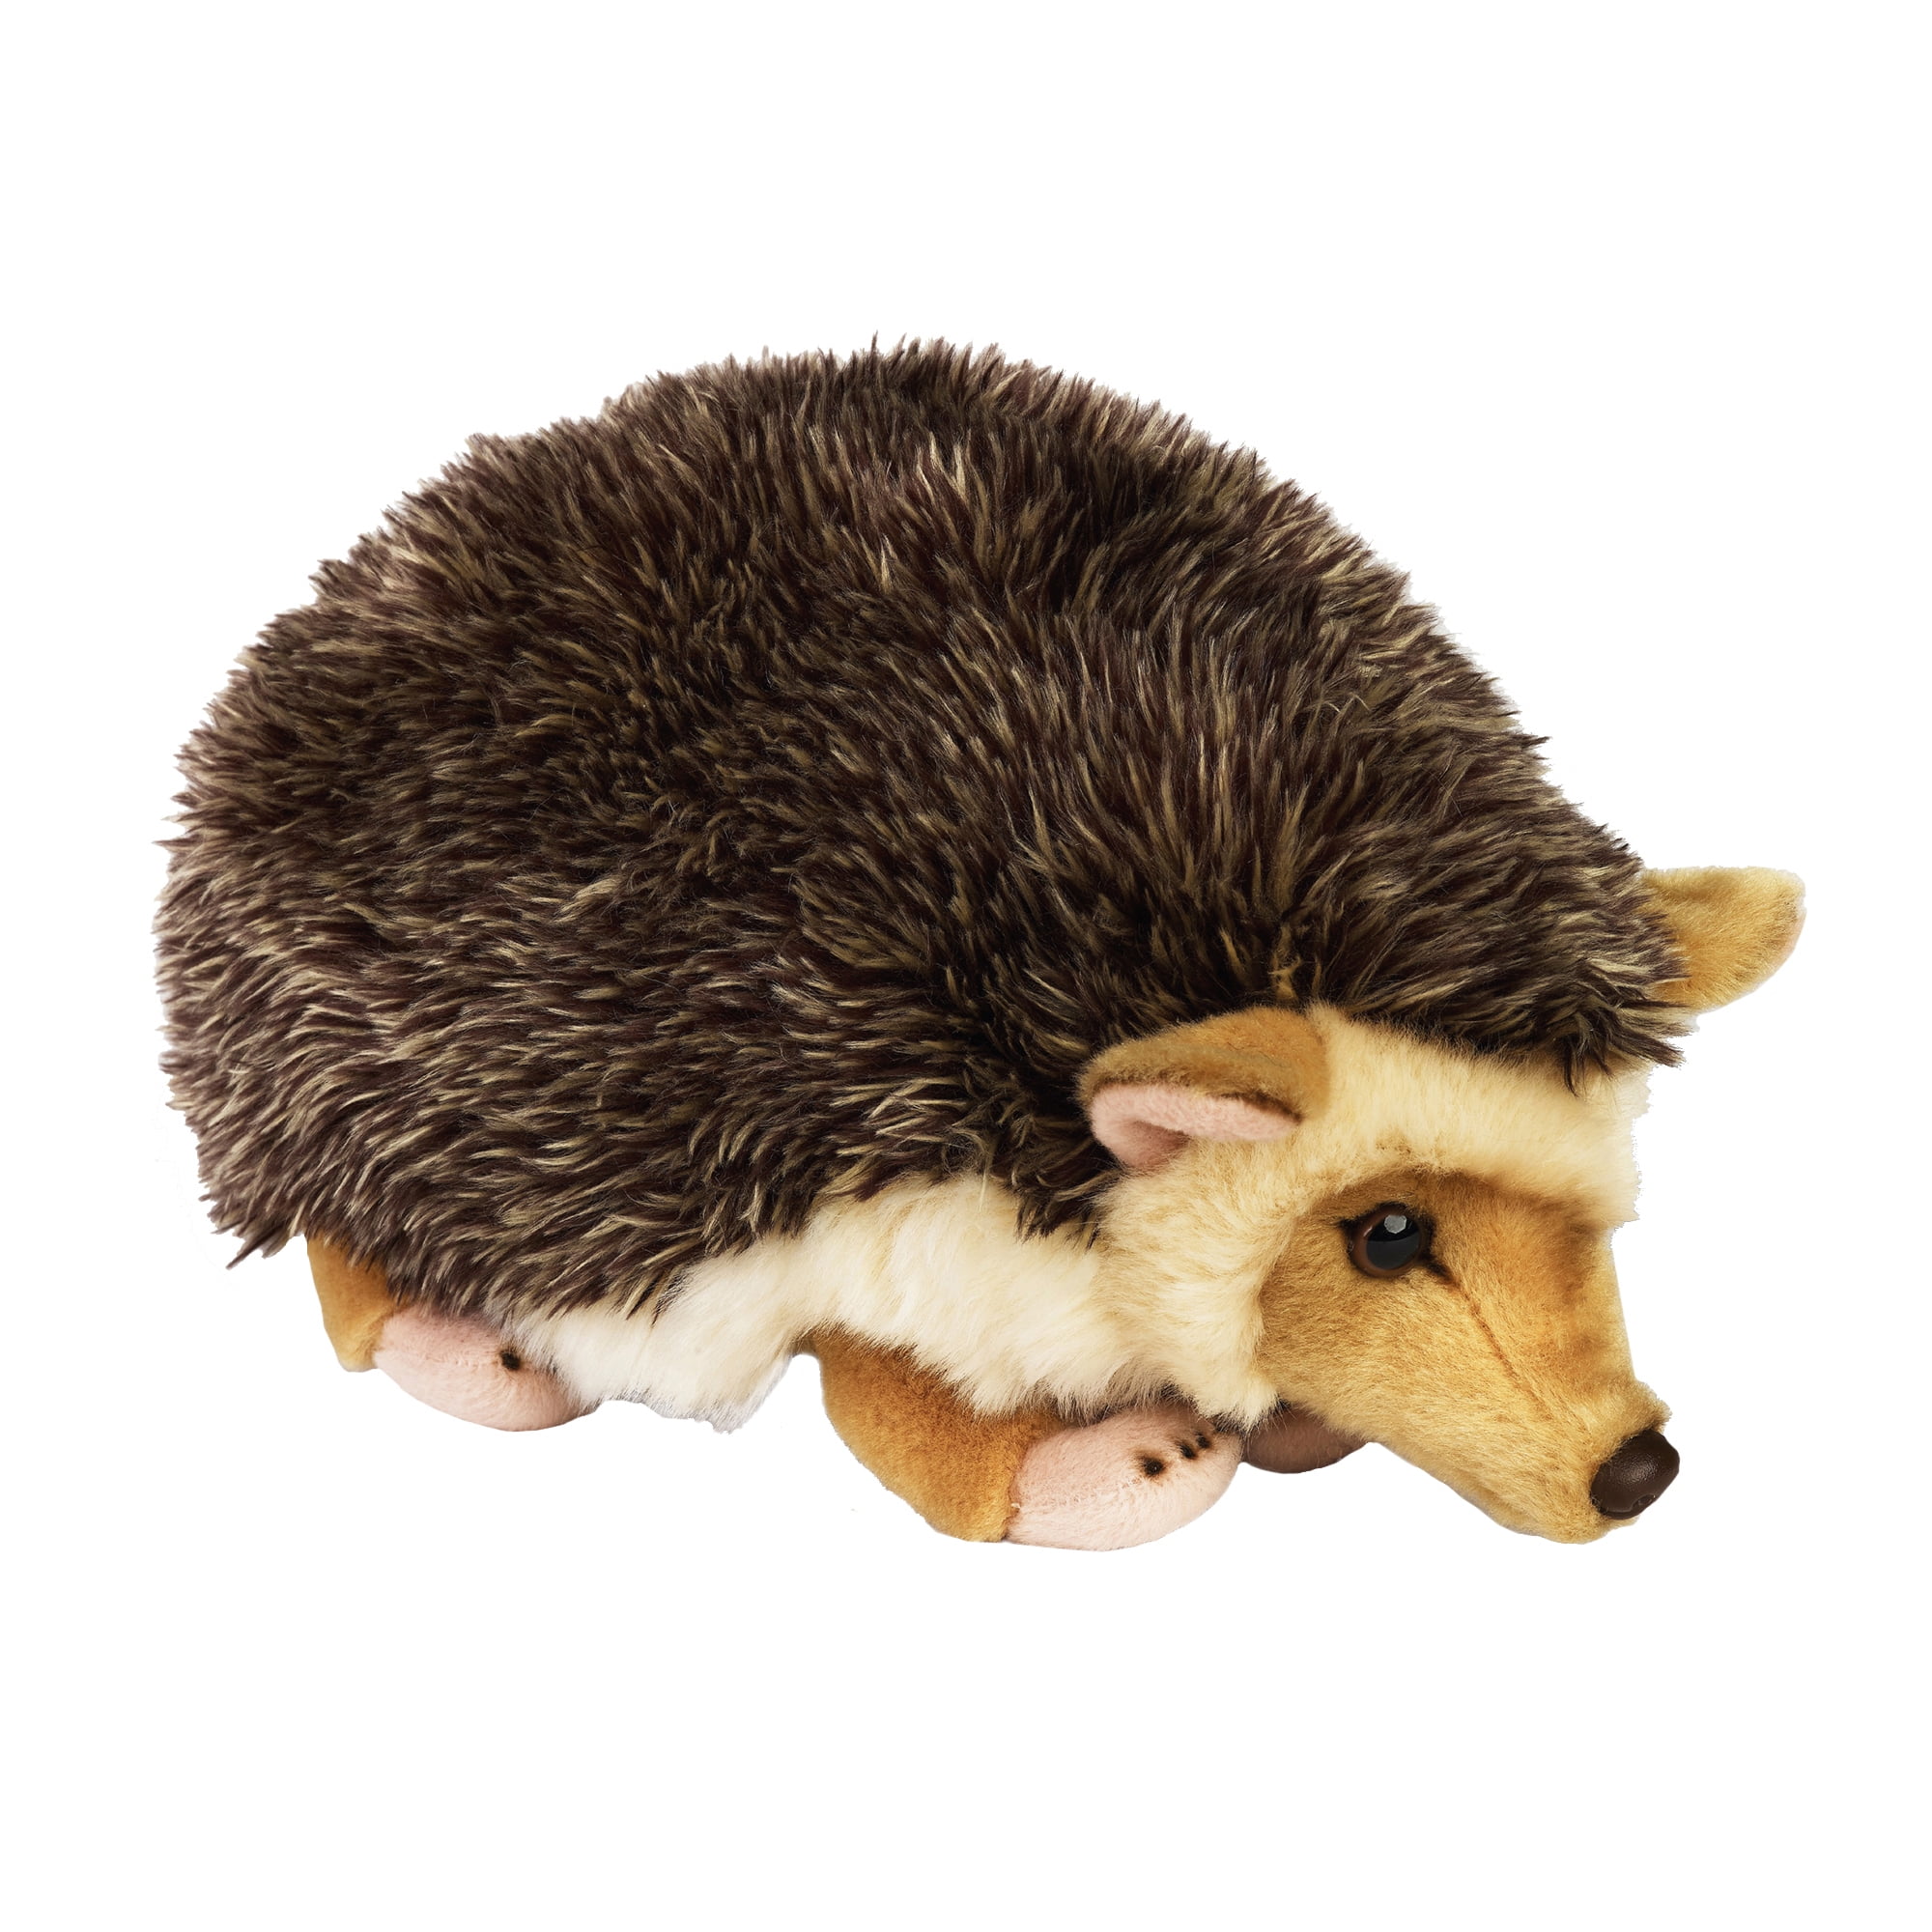 Lelly - National Geographic Plush, Desert Hedgehog - Walmart.com